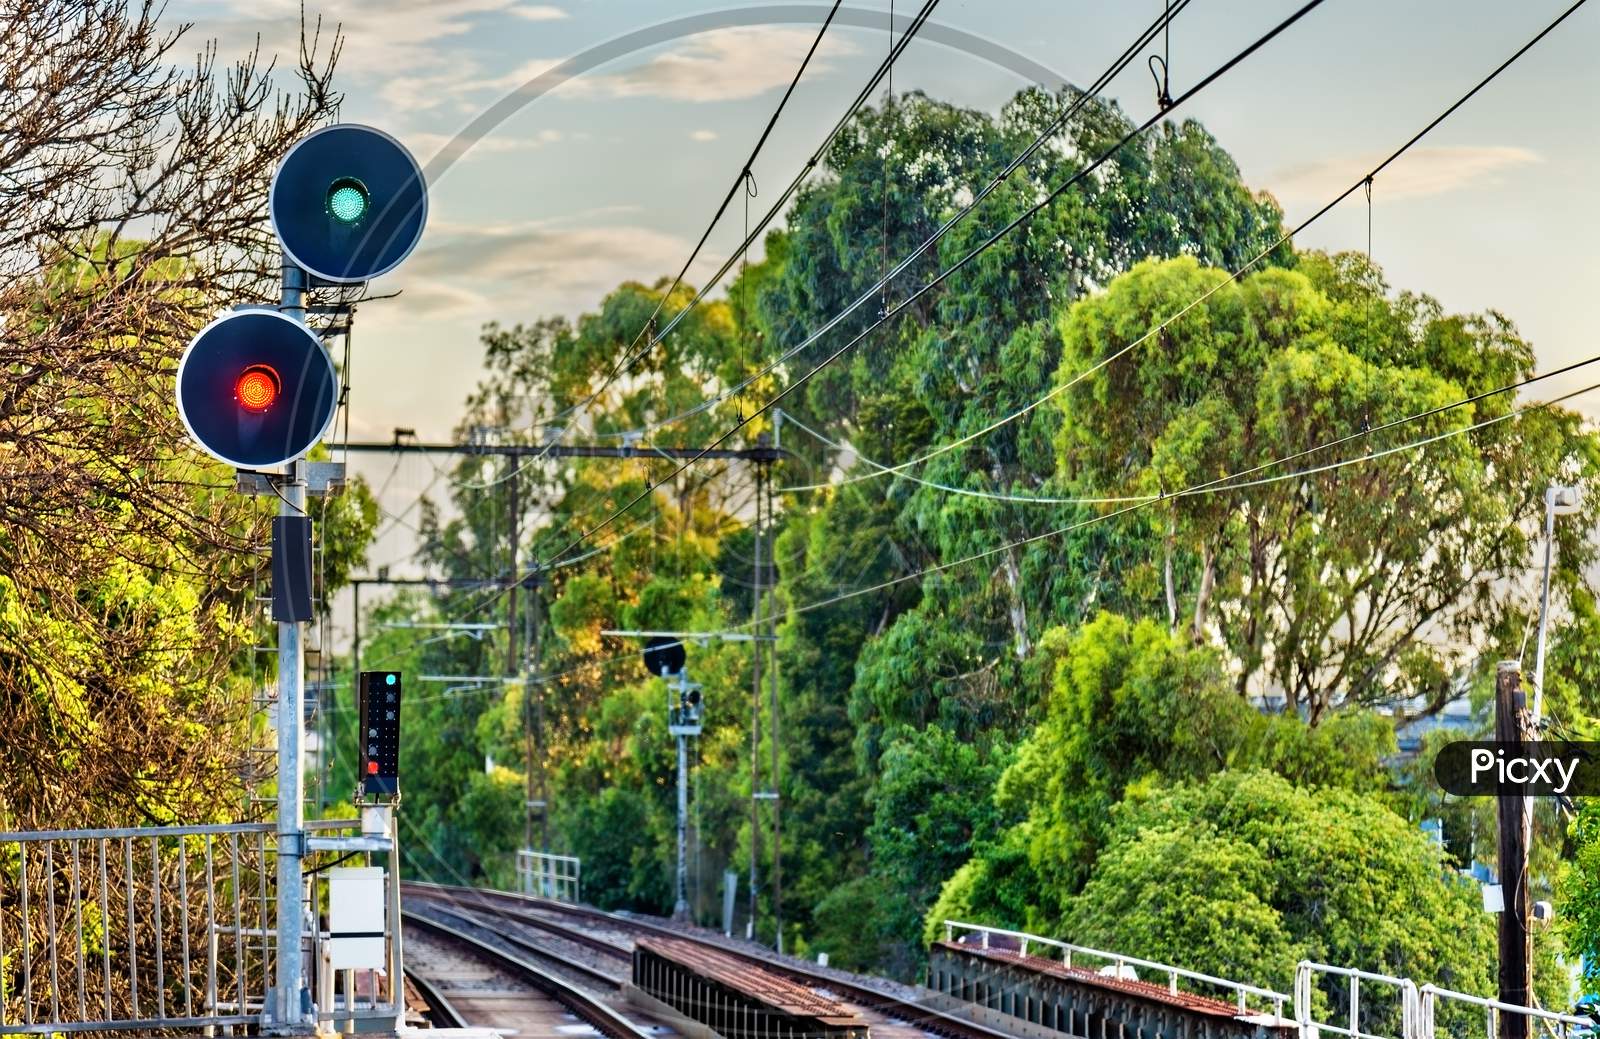 Railway Signal In Melbourne, Australia